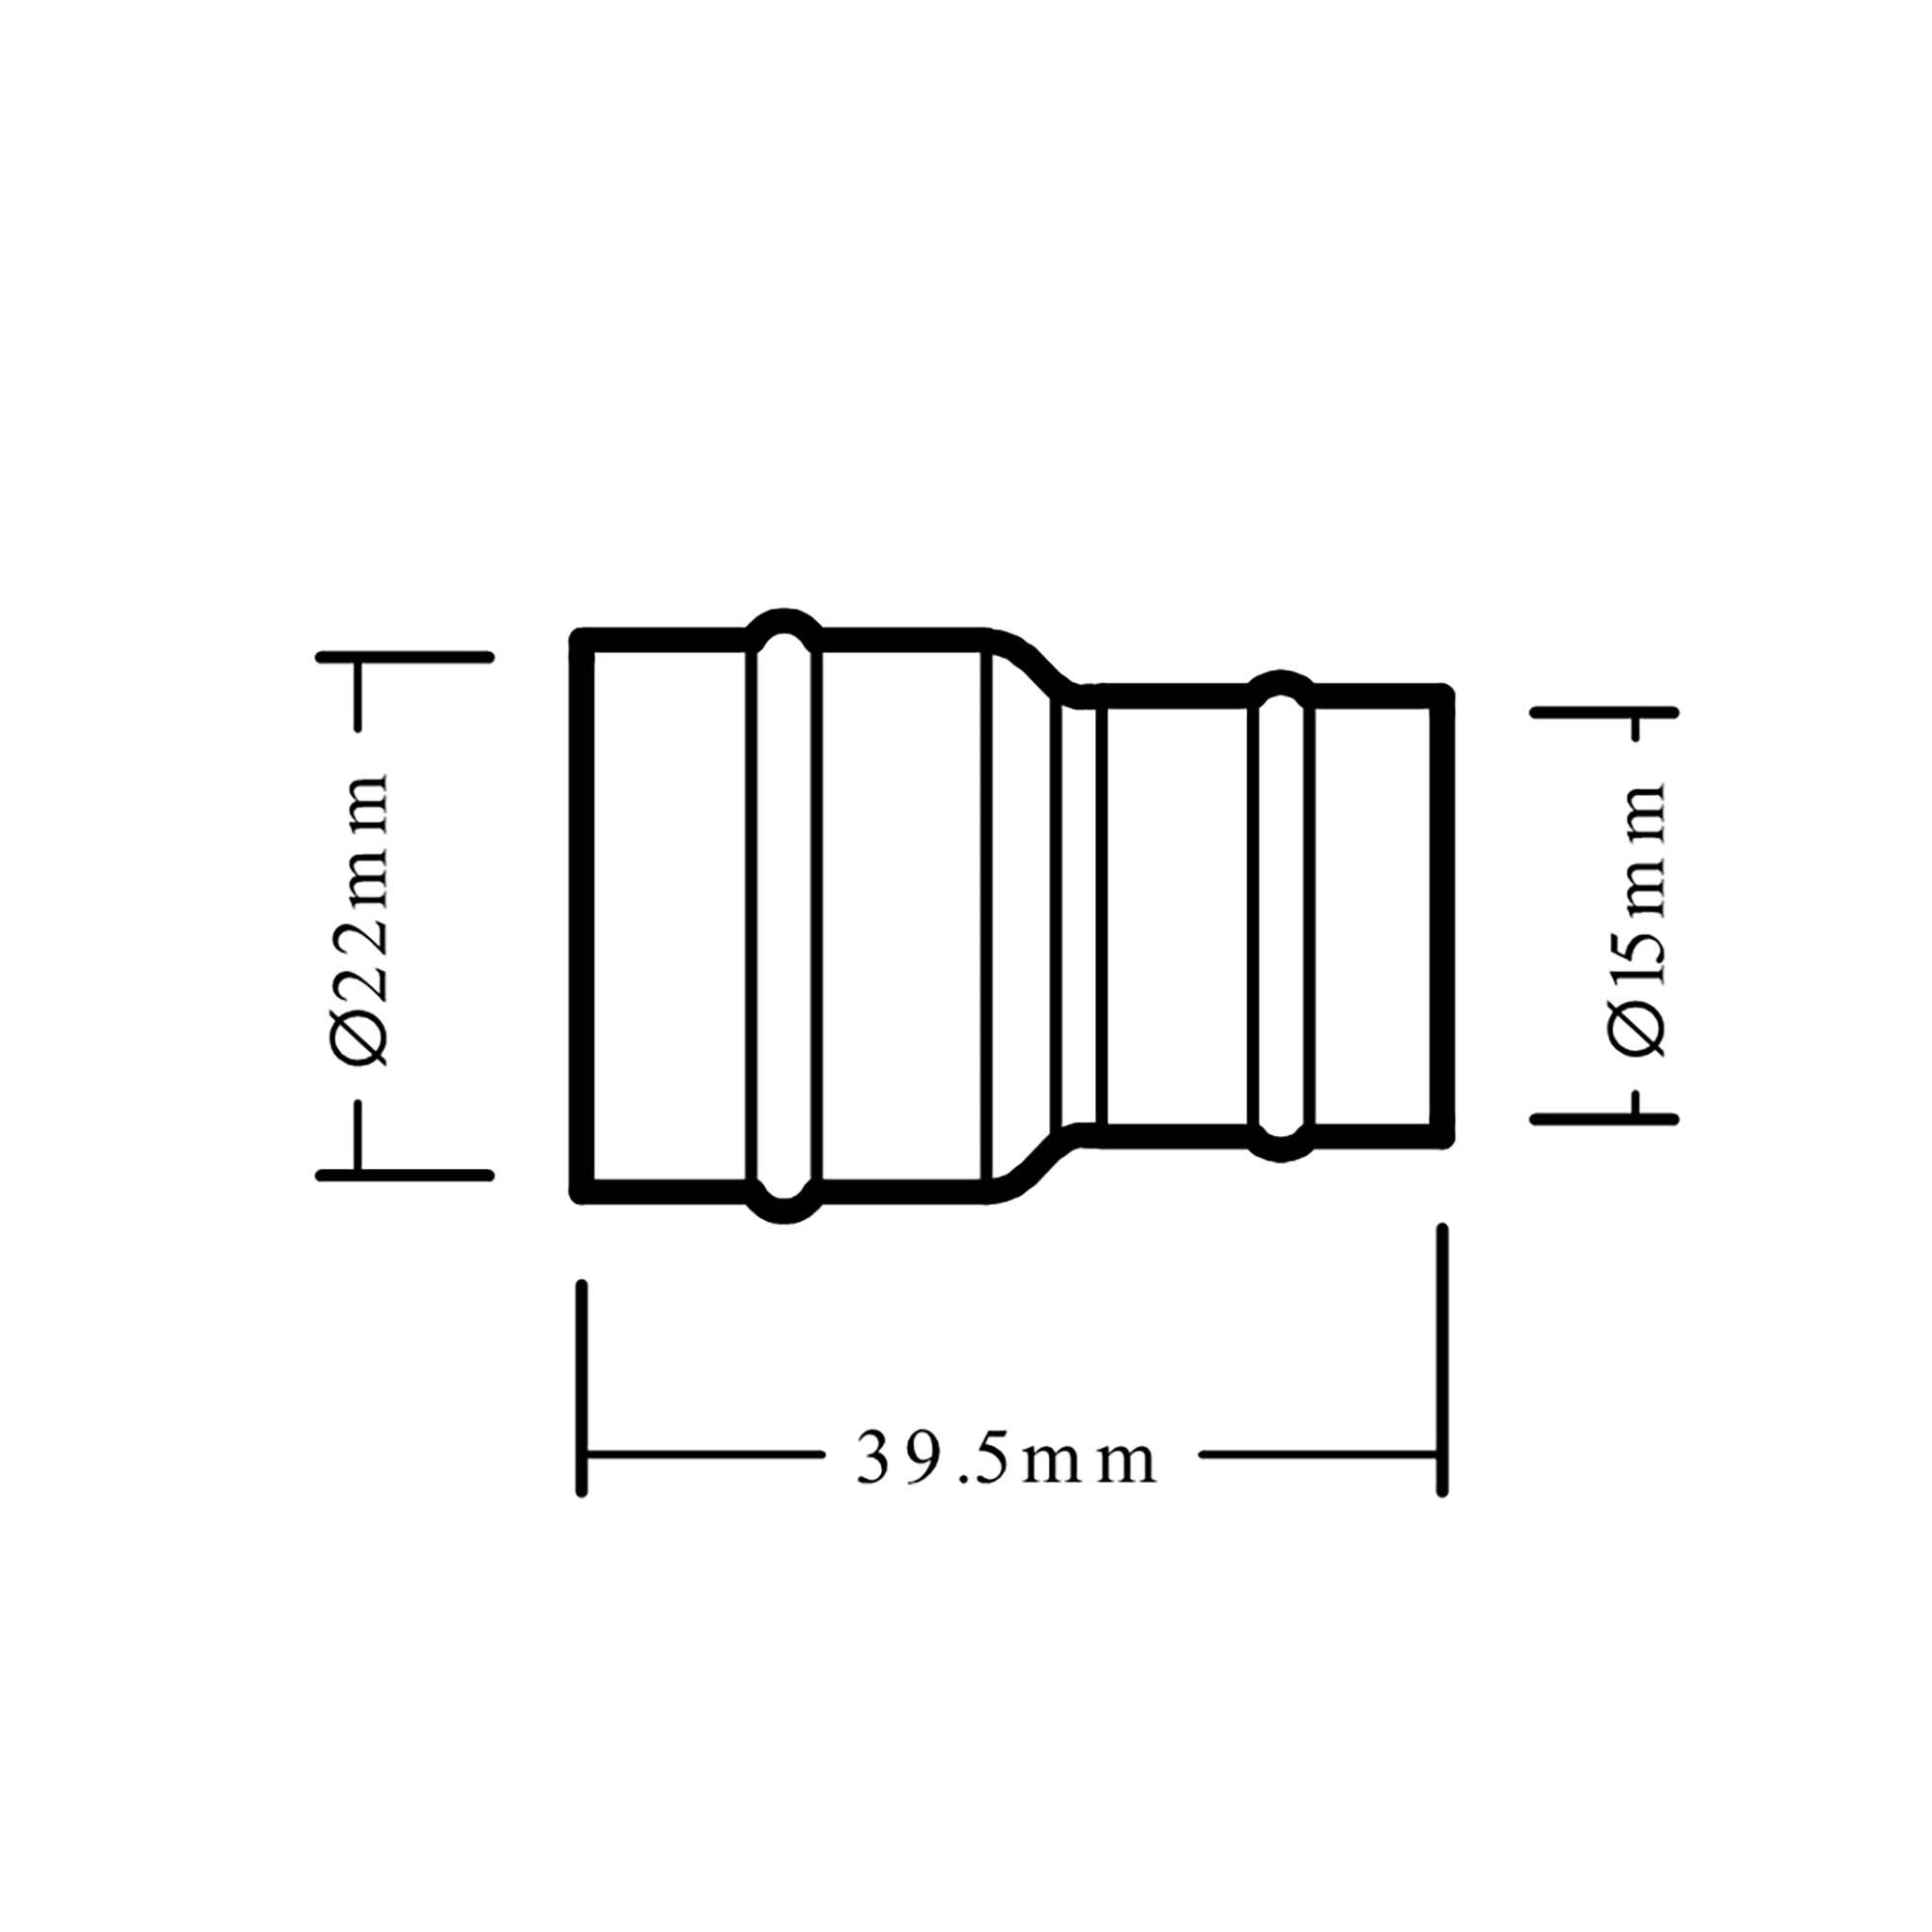 Plumbsure Solder ring Reducing Coupler (Dia)22mm